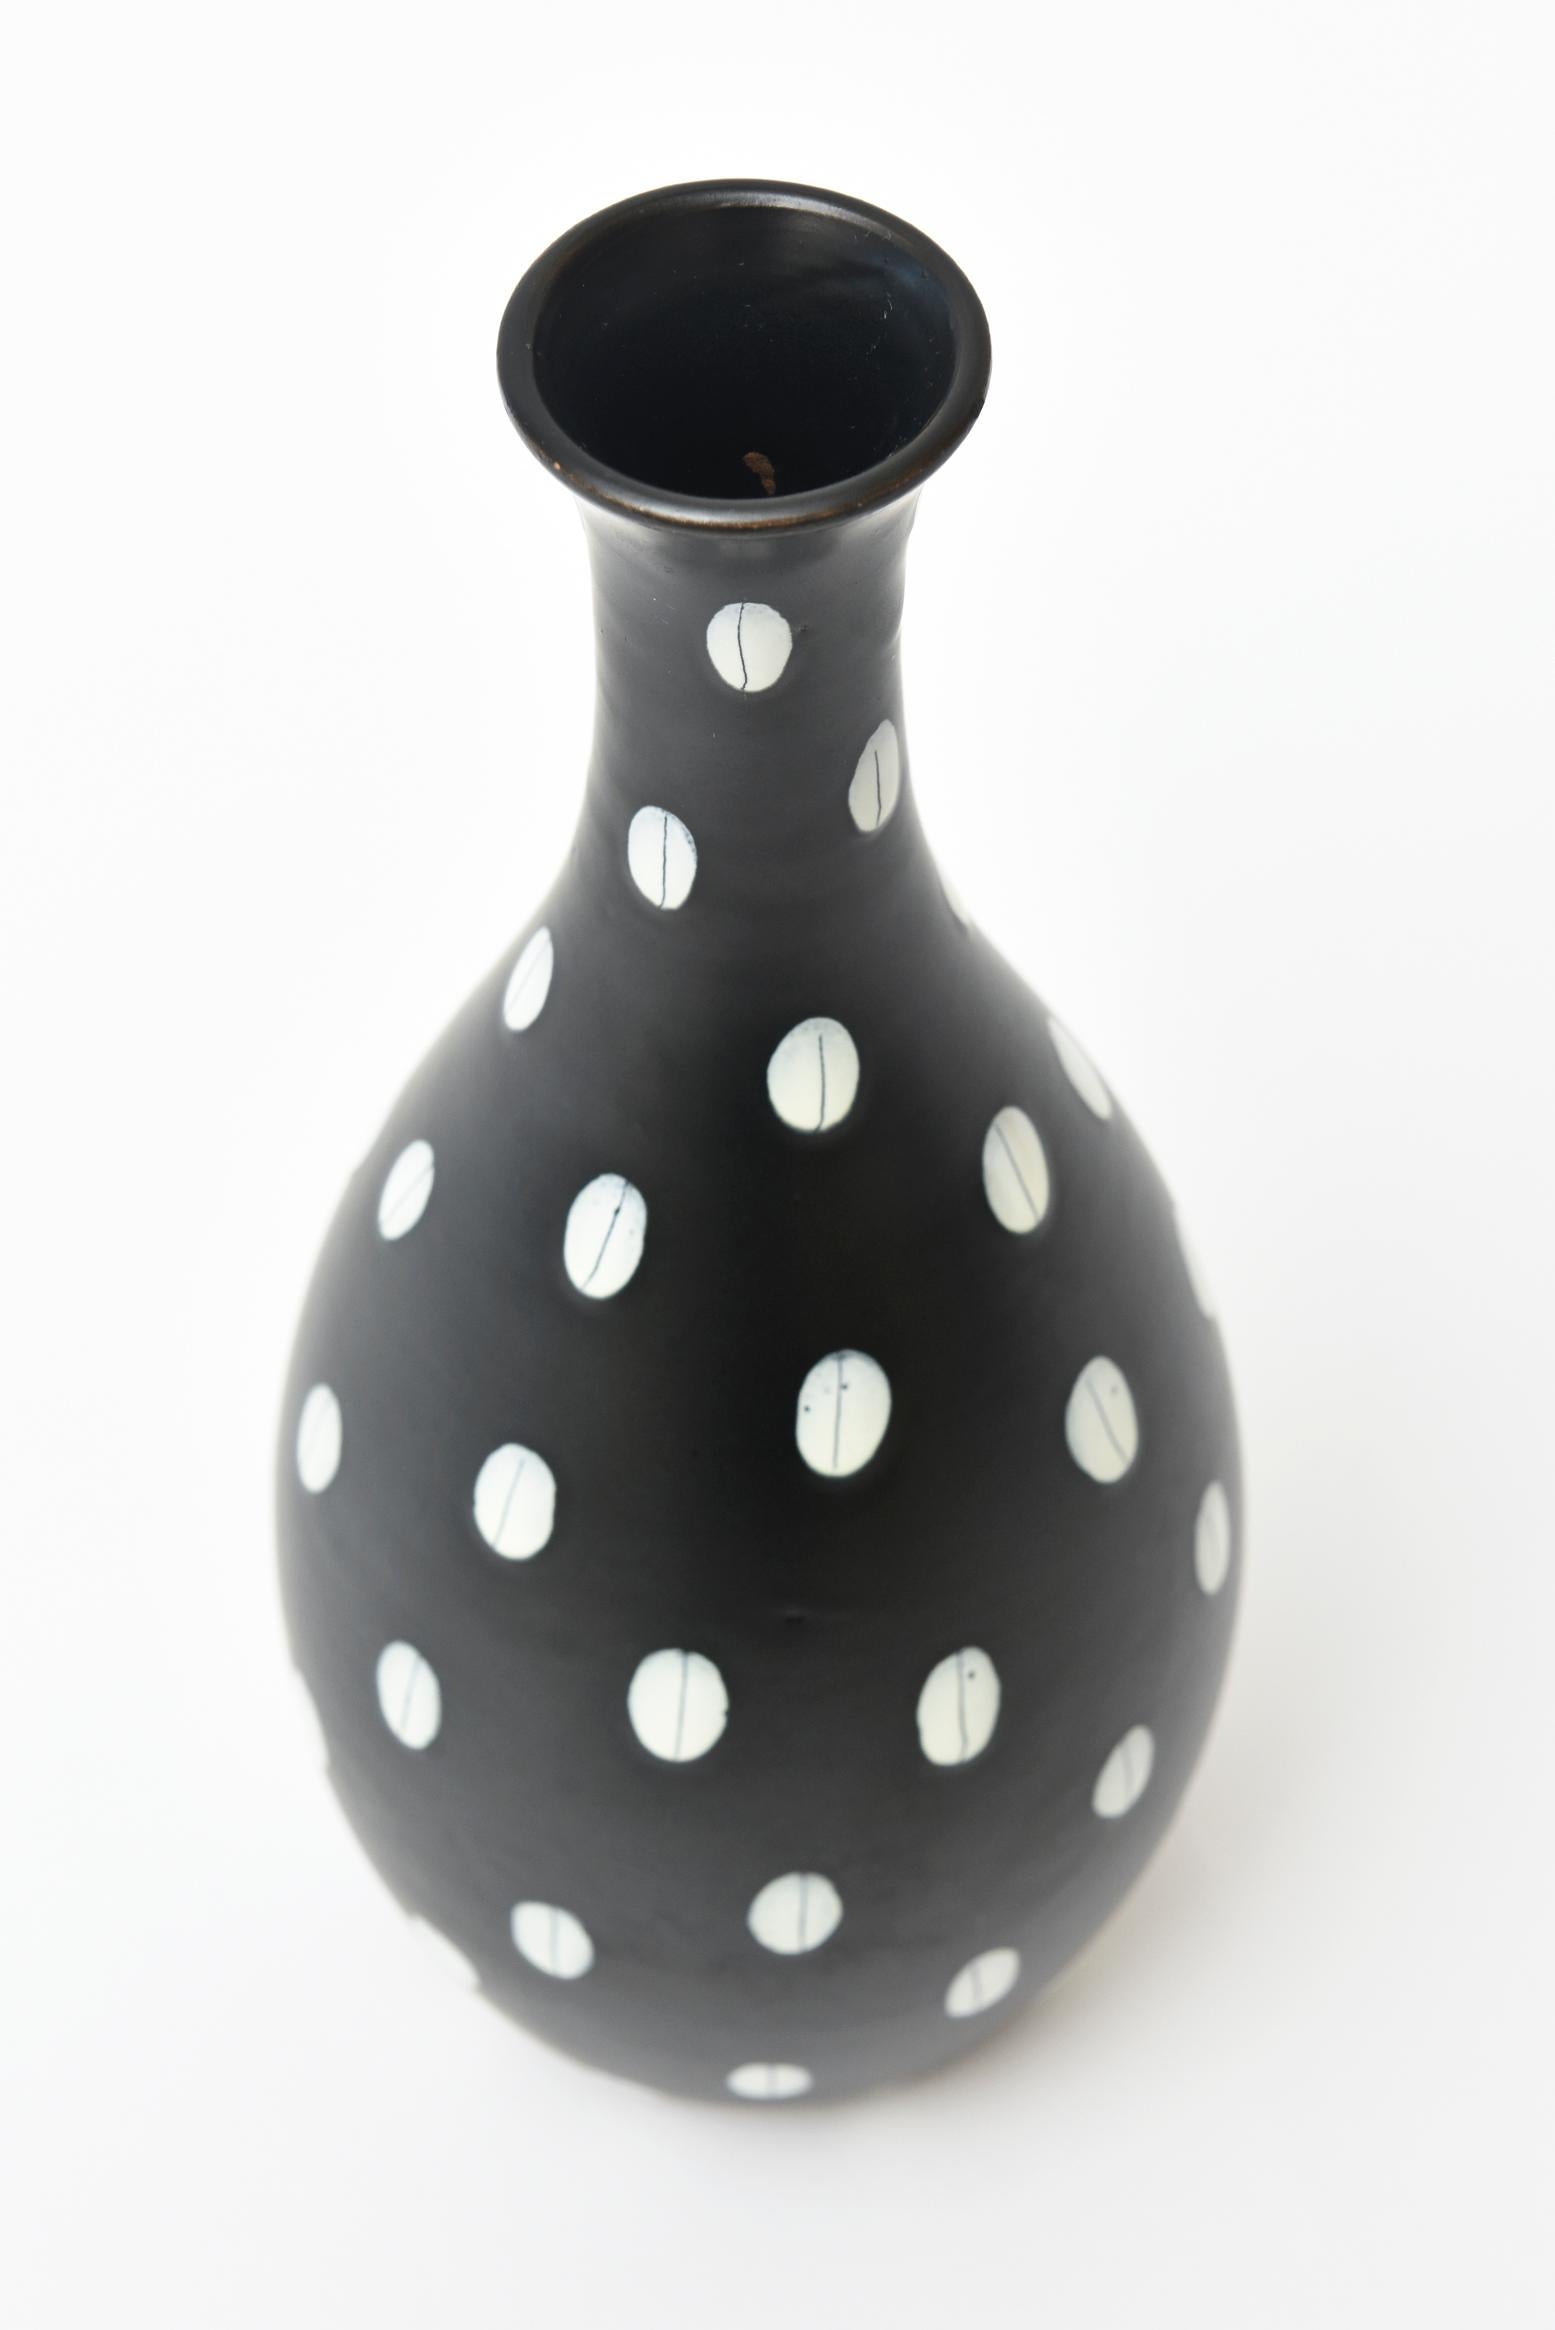 Mid-Century Modern Aldo Londi for Bitossi Italian Black and White Ceramic Vase Vintage